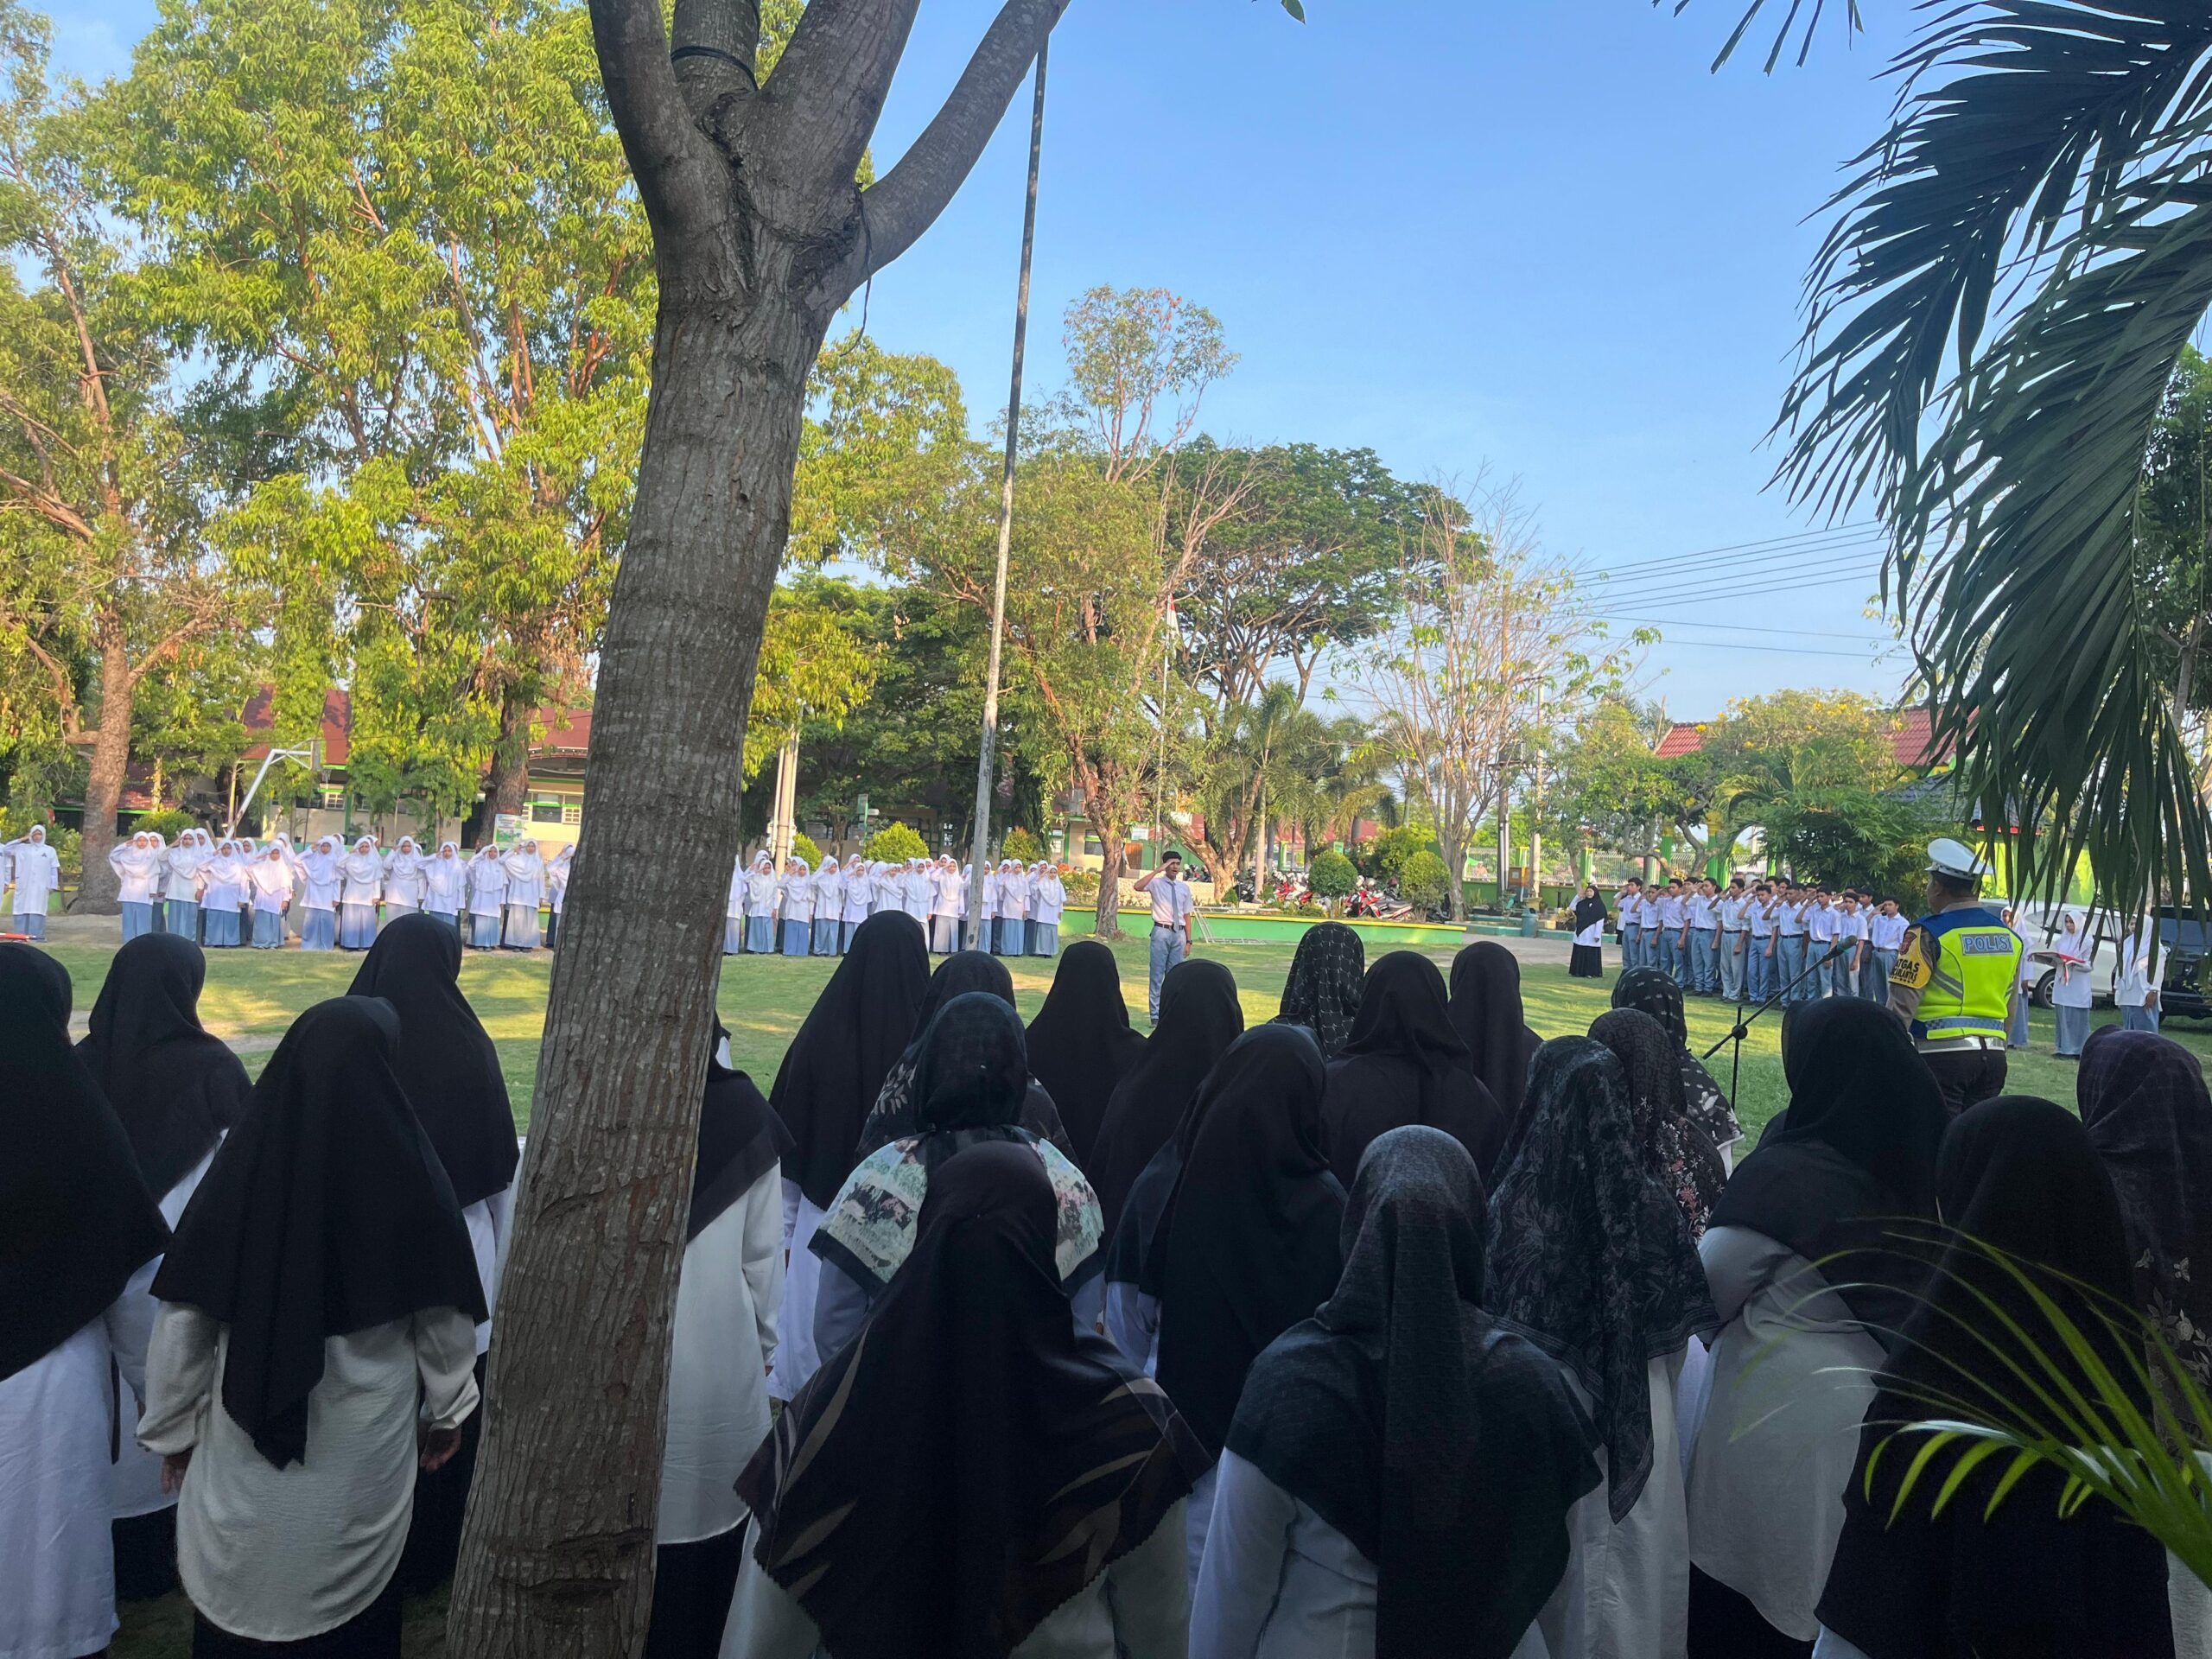 Polisi' Saweu Sikula Dalam Rangka Sosialisasi Tertib Lalulintas Di Sekolah 17 Kecamatan Wilayah Hukum Polres Bireuen